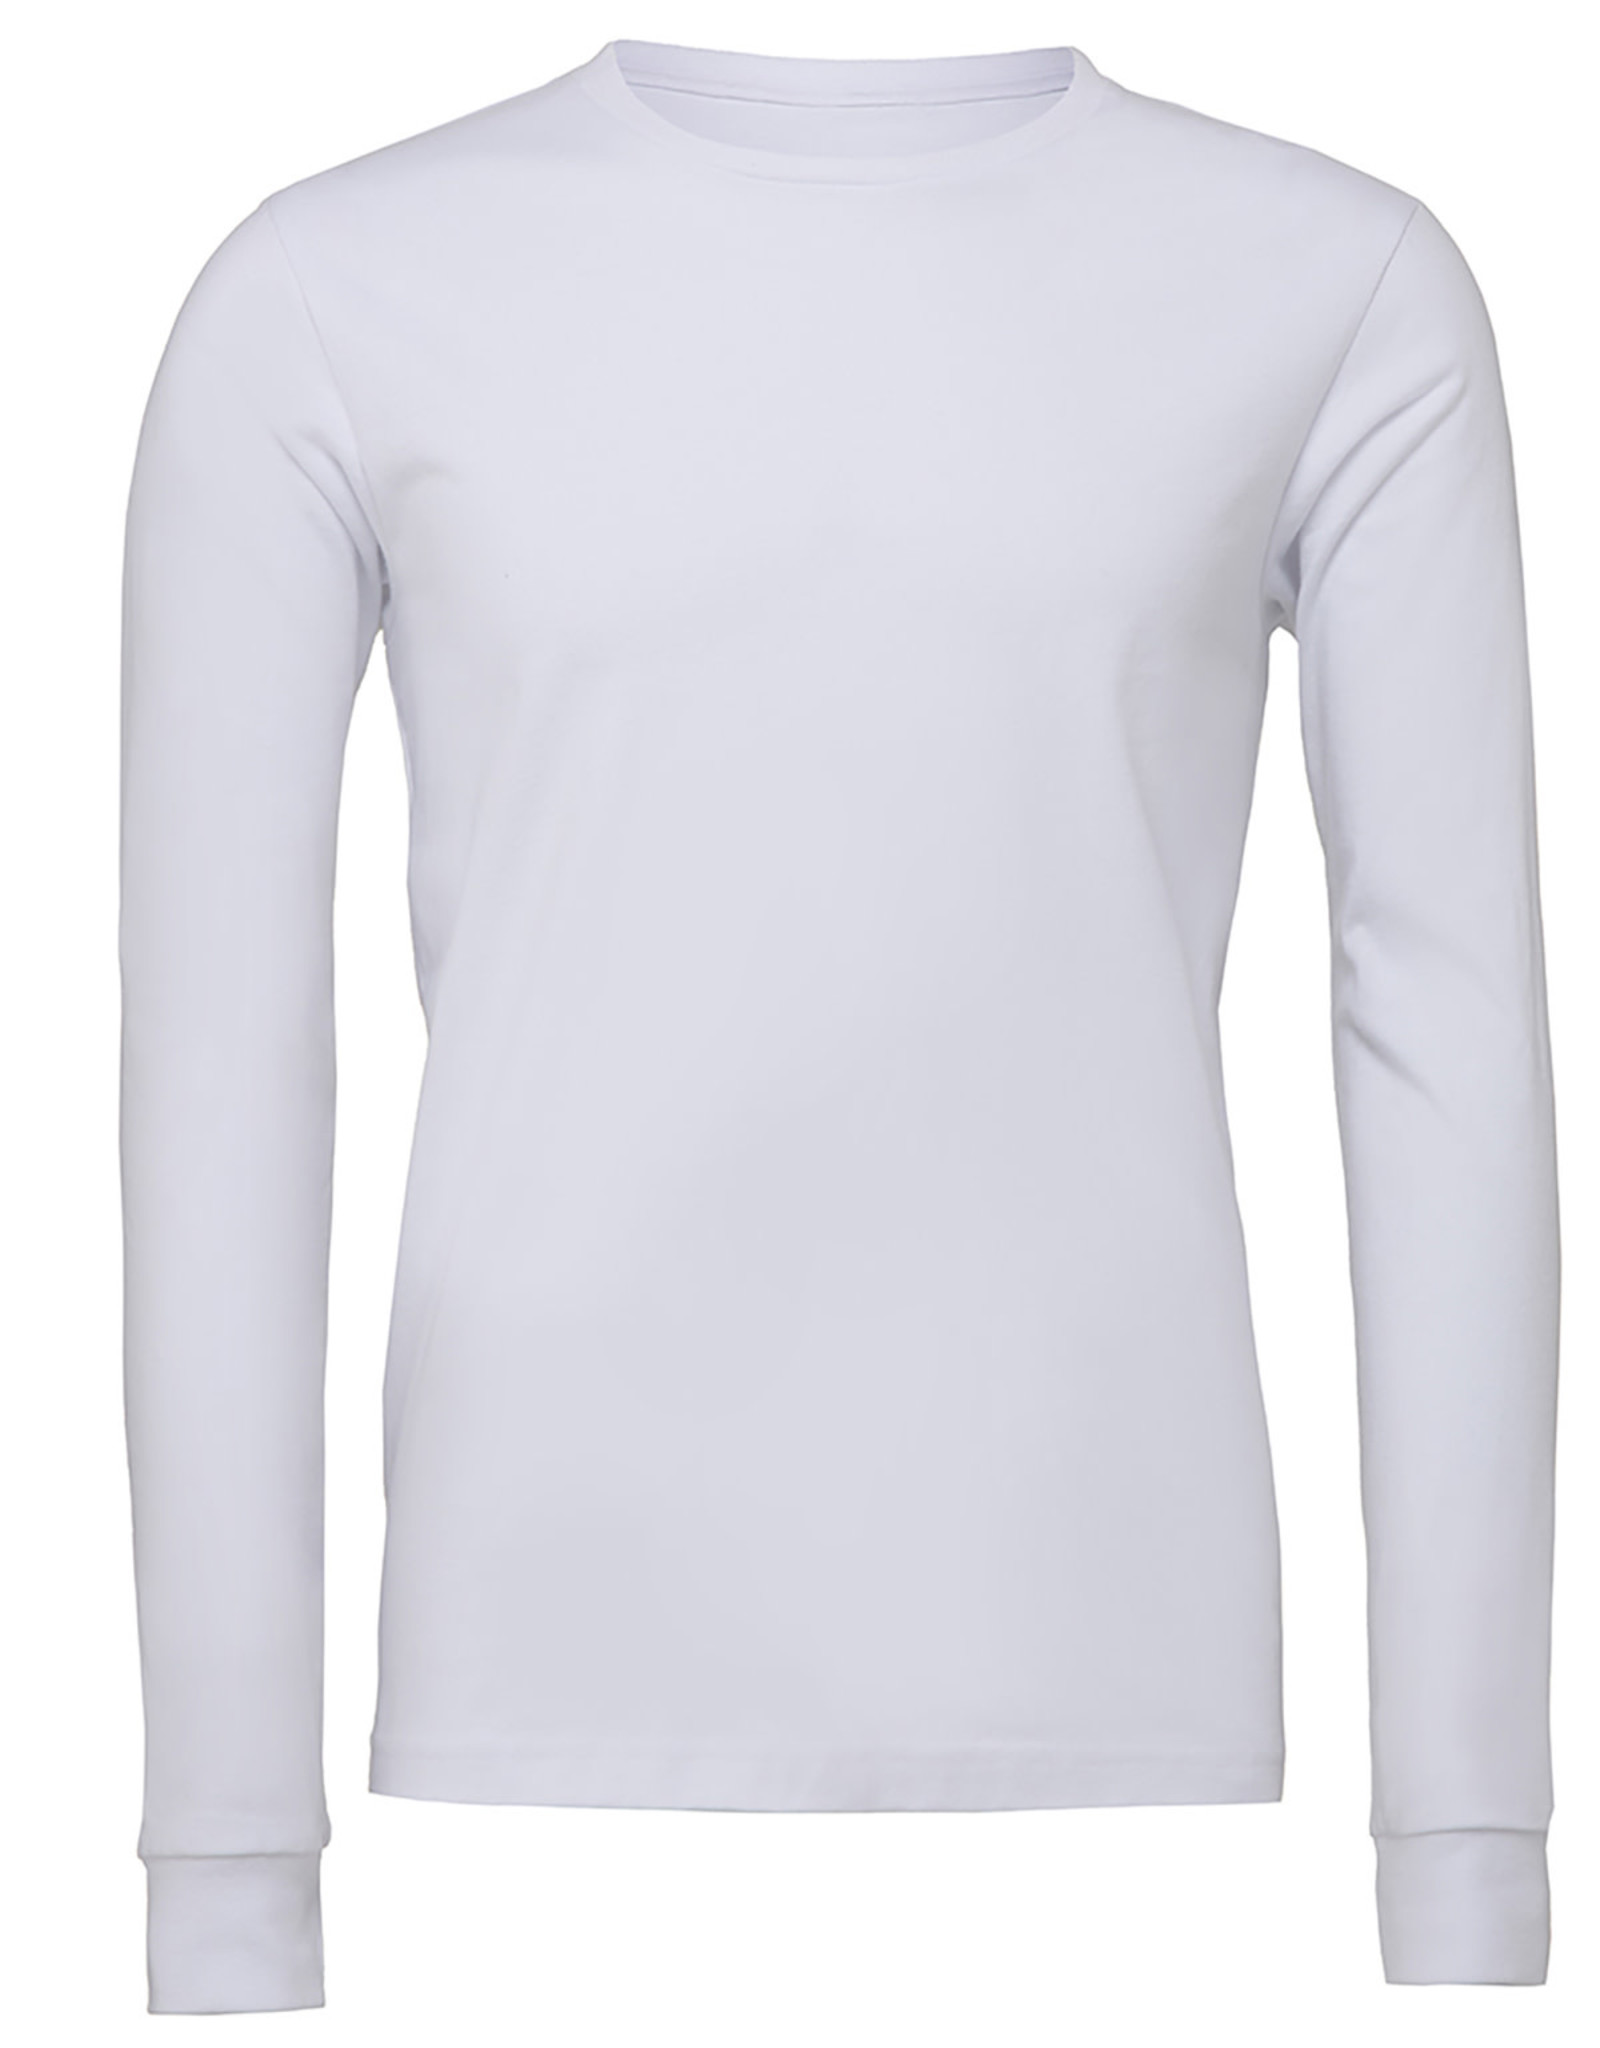 NON-UNIFORM SHIRT - Long Sleeve Custom Shirt, custom